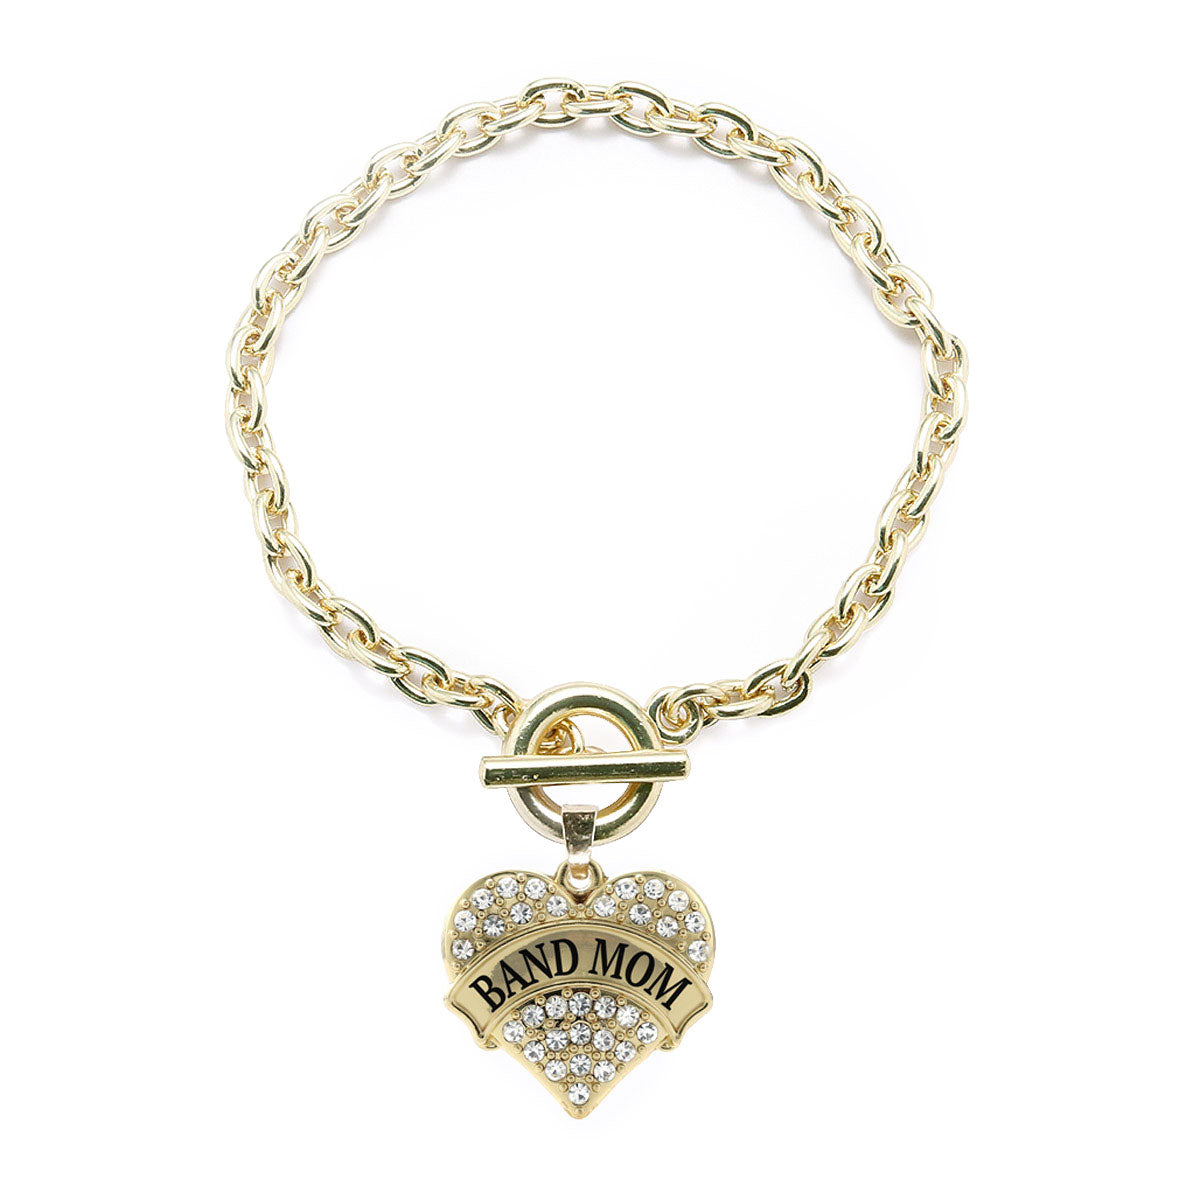 Gold Band Mom Pave Heart Charm Toggle Bracelet